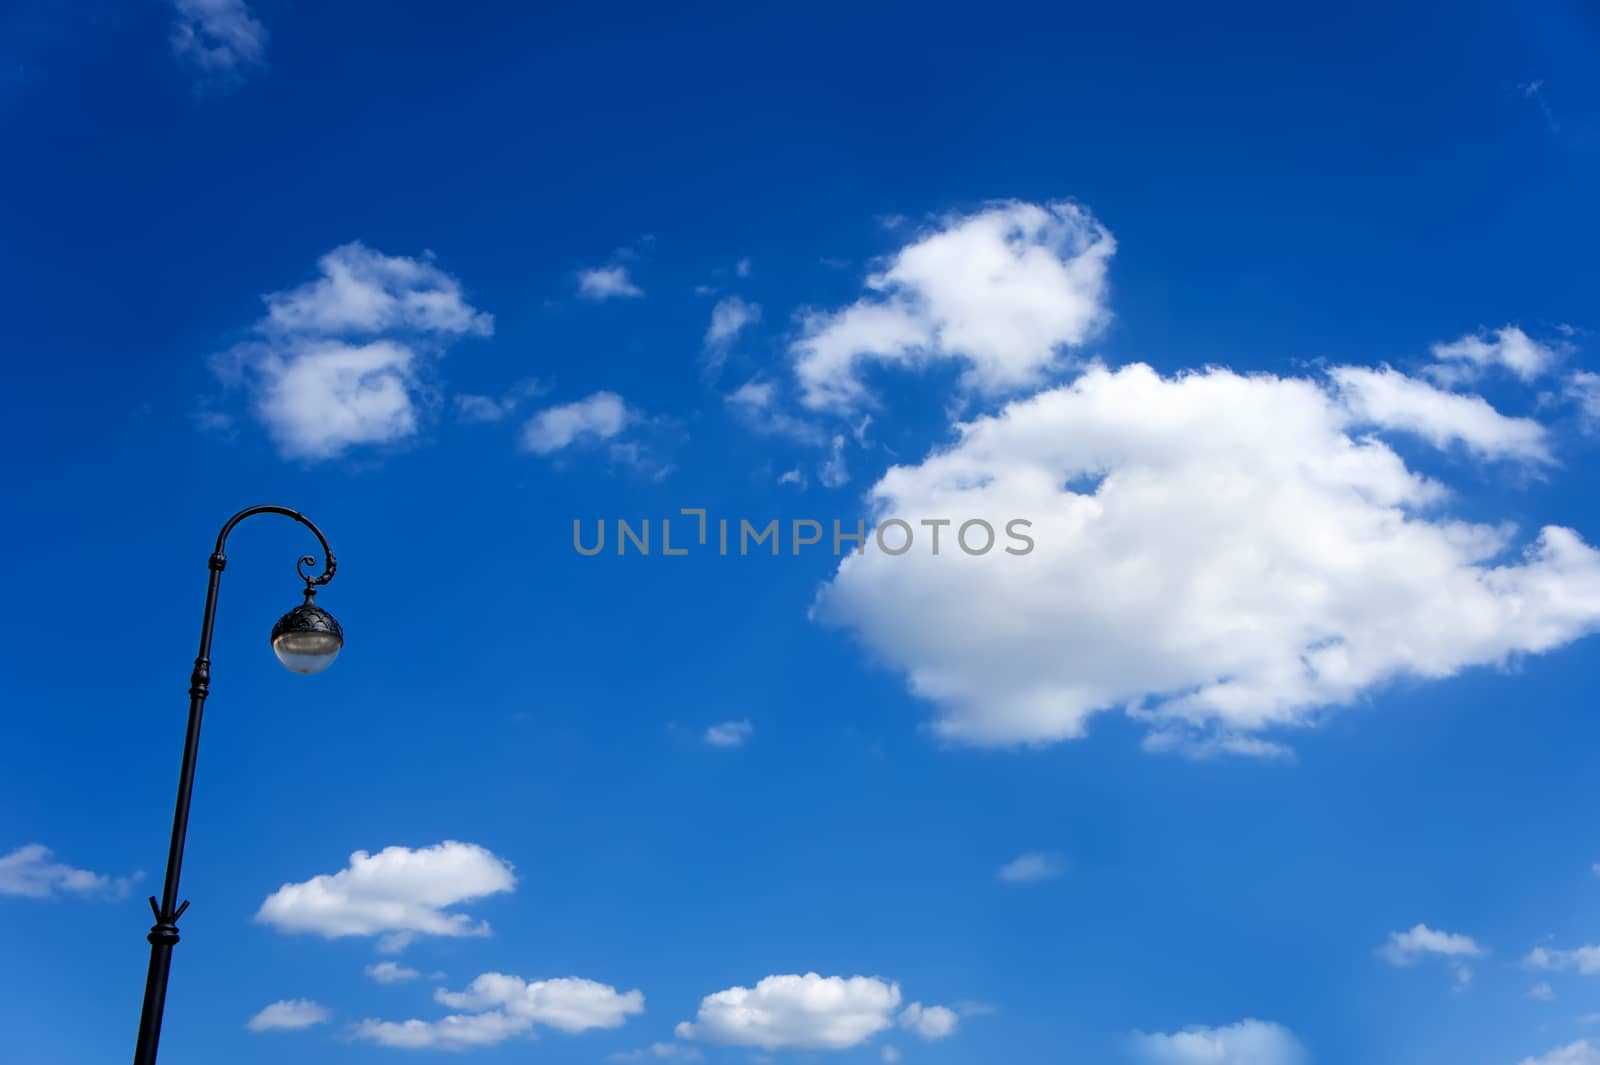 street lamppost against the blue sky by wolegsan